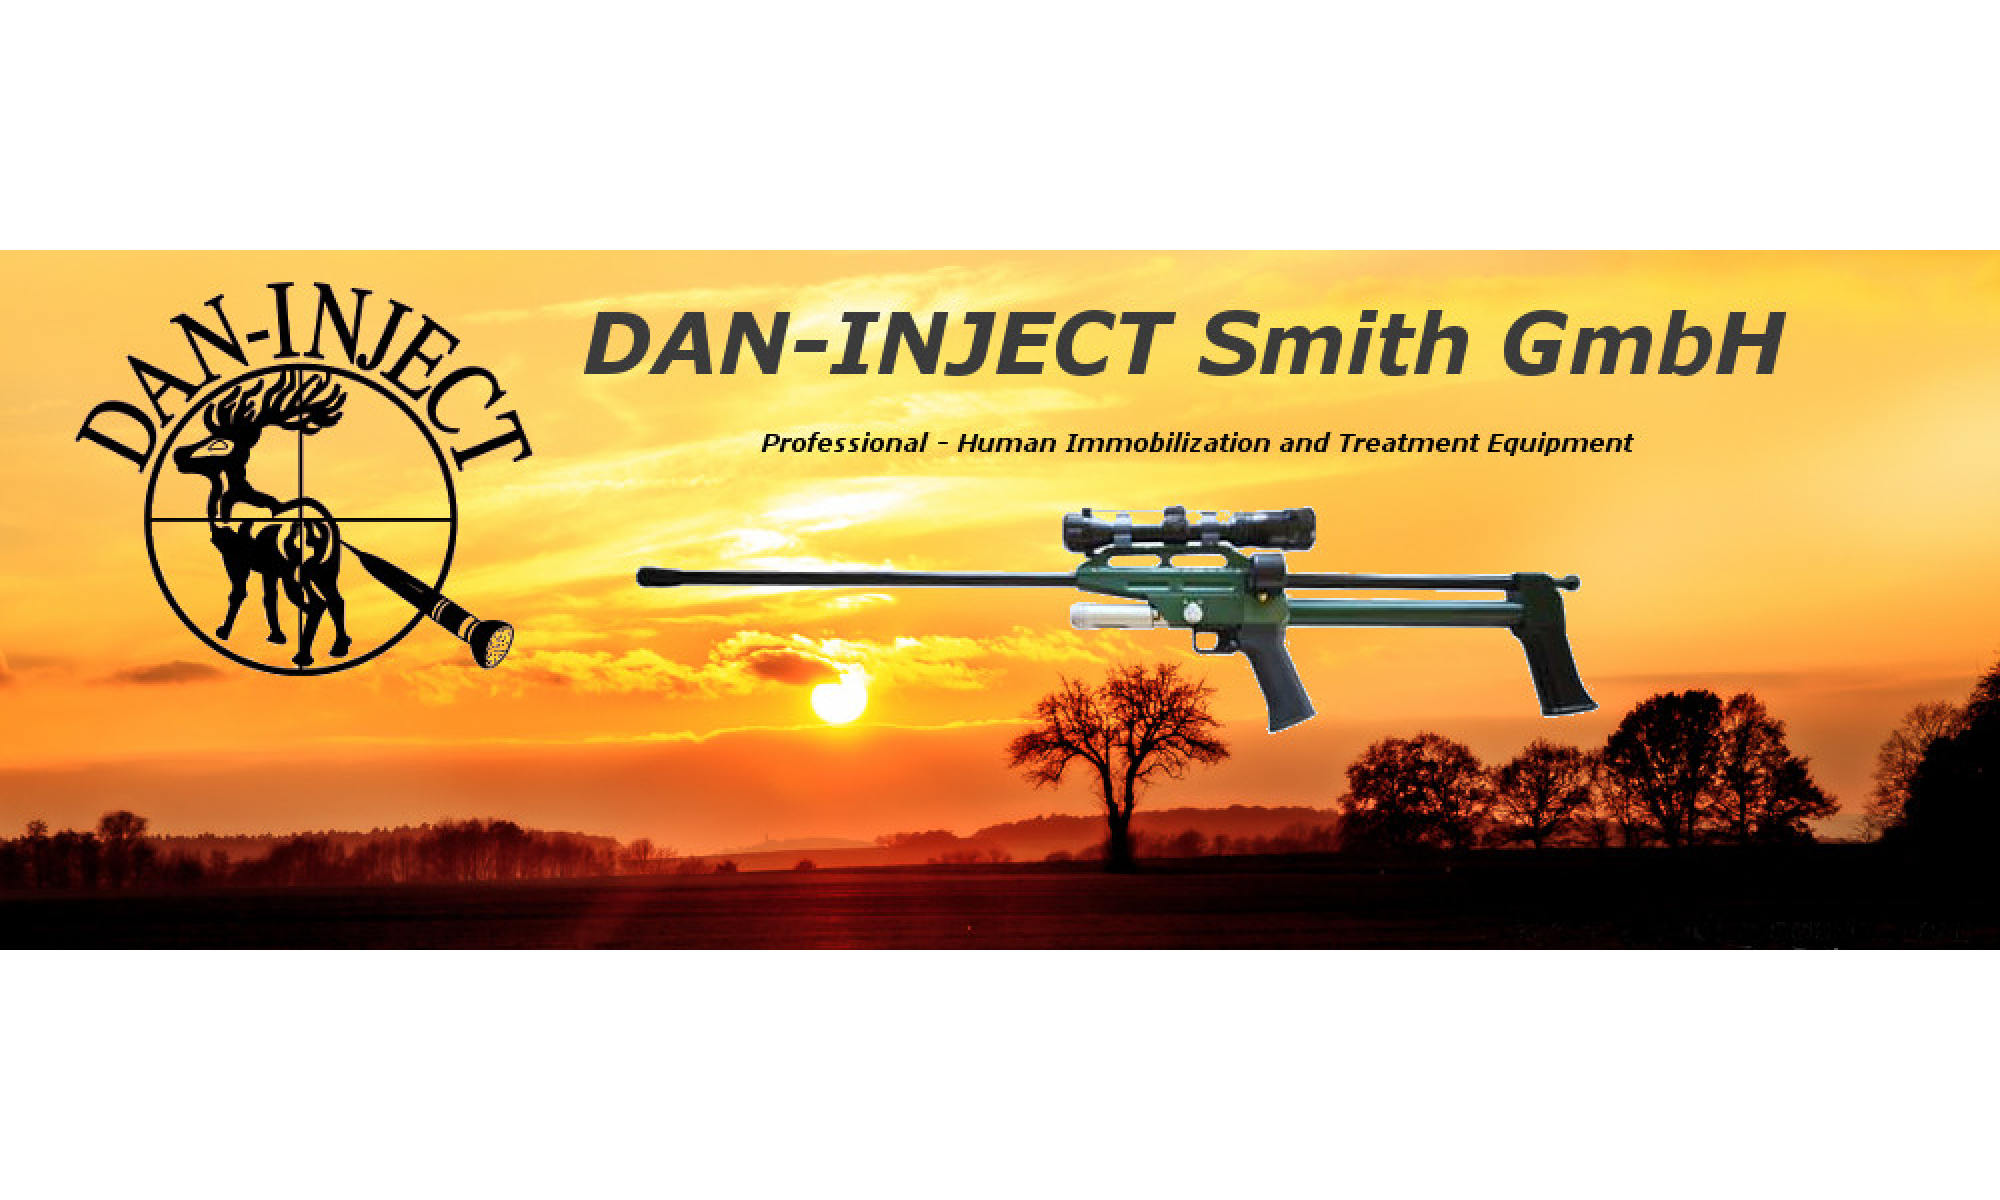 DAN-INJECT Smith GmbH